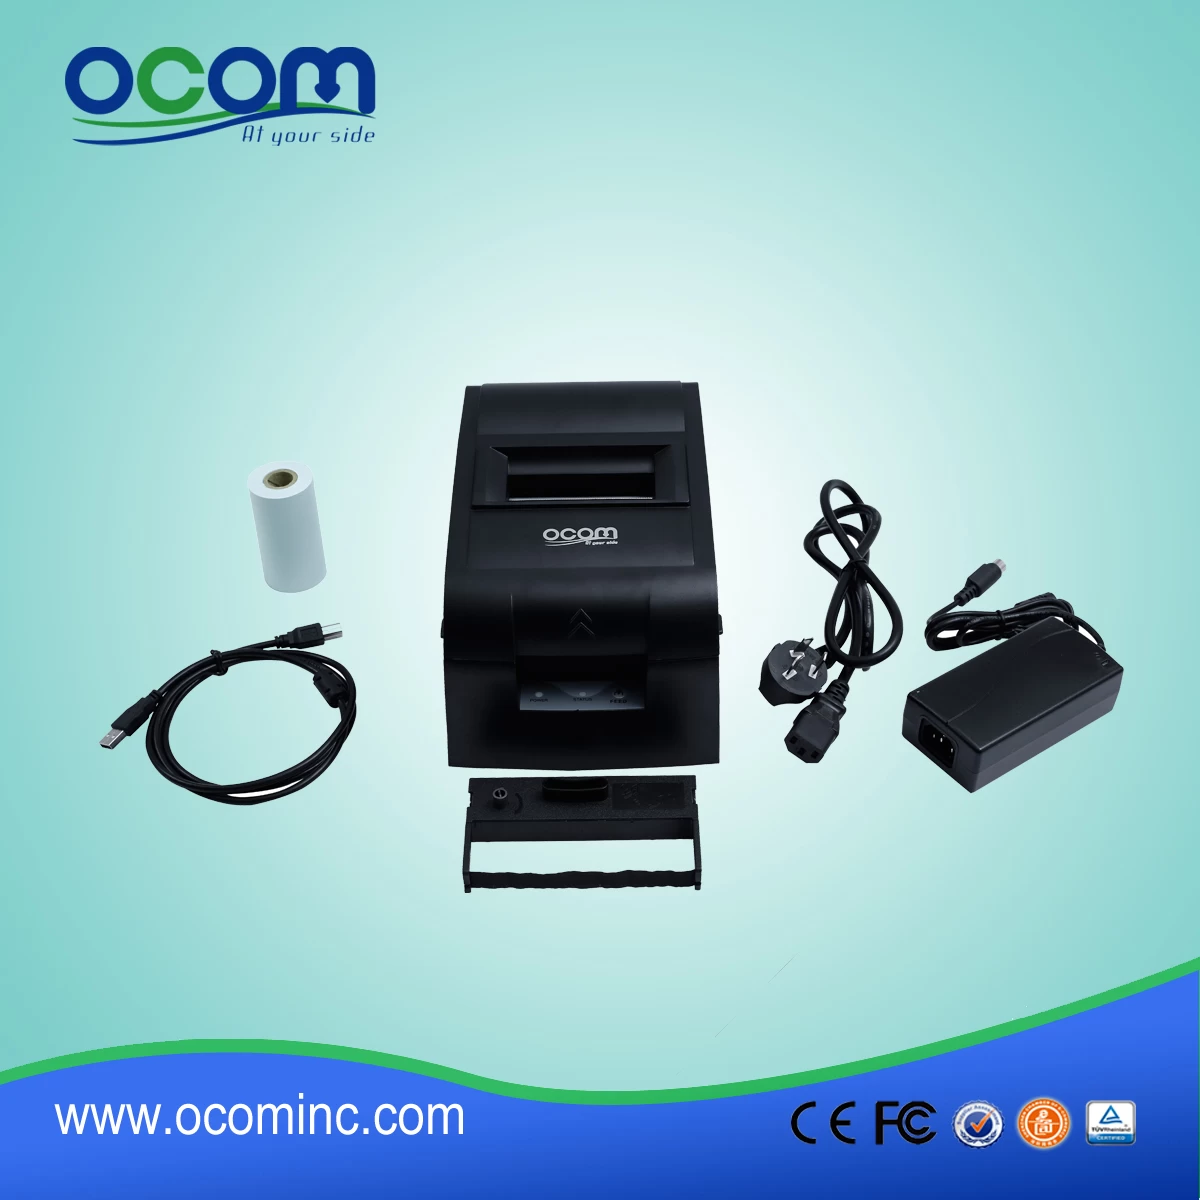 Ocpp-762 4 Inch 76mm DOT Matrix Printer with Serial Interfaces